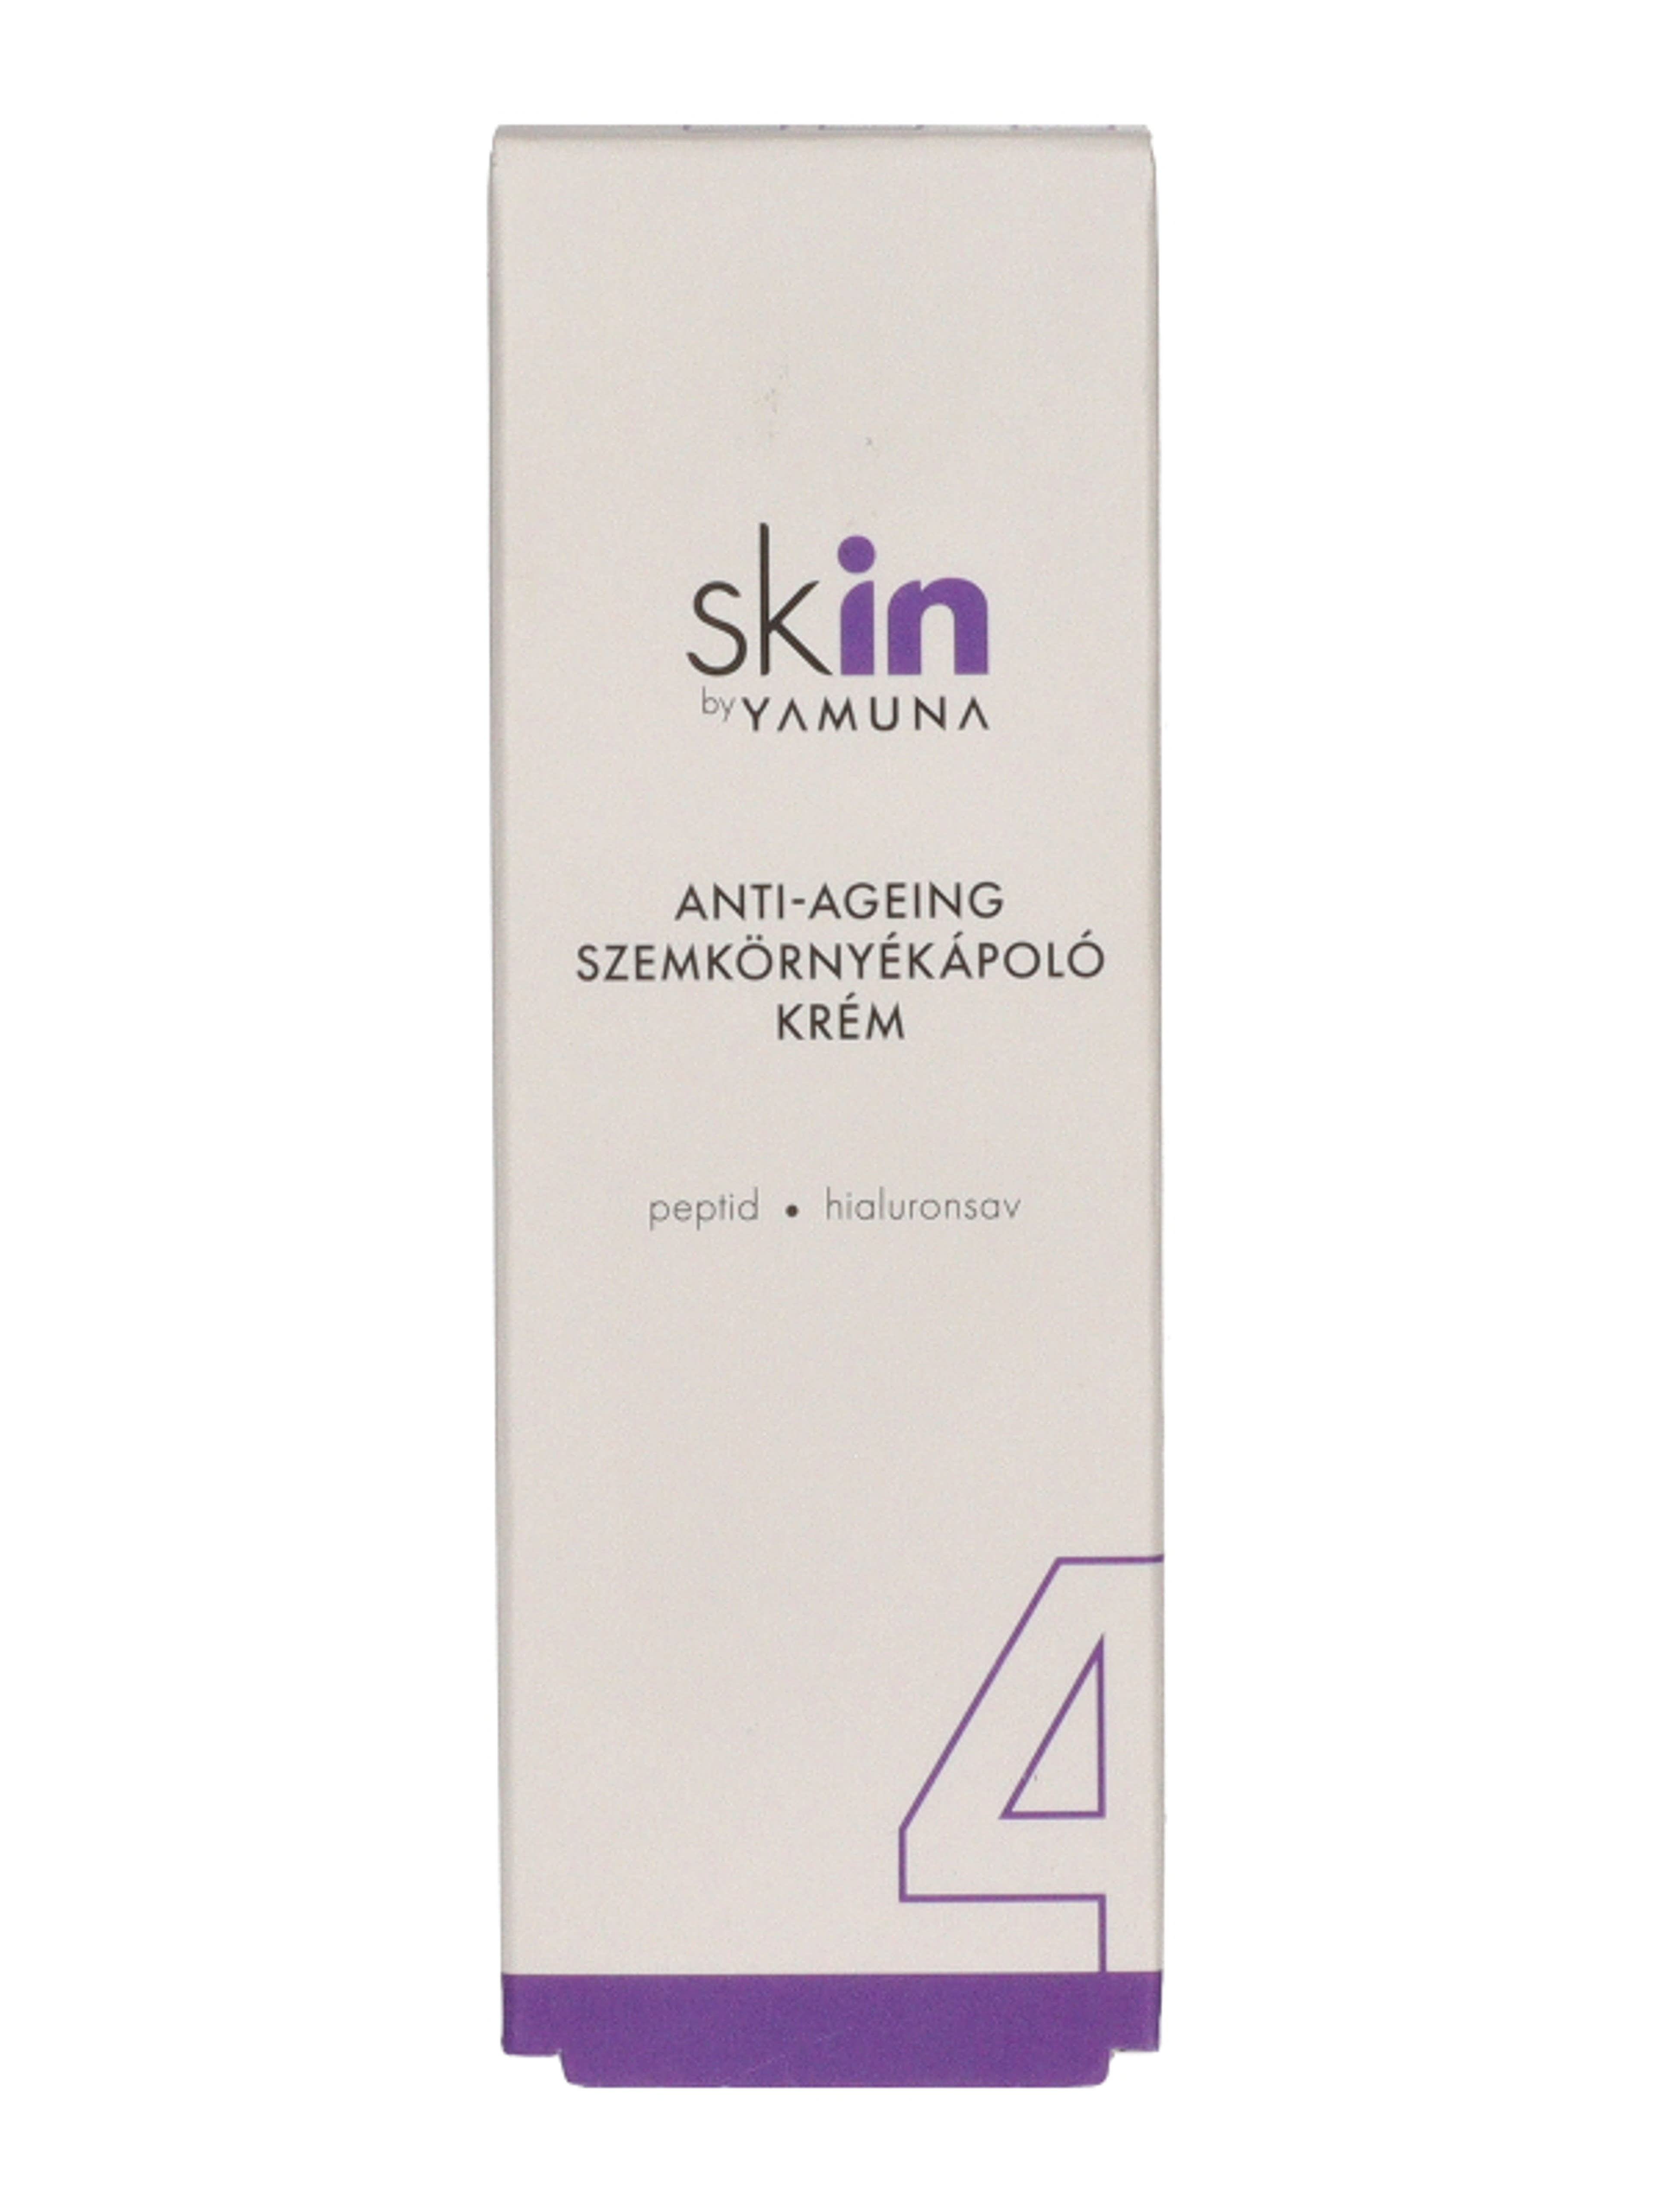 Yamuna Skin Anti-ageing szemkörnyékápoló - 15 ml